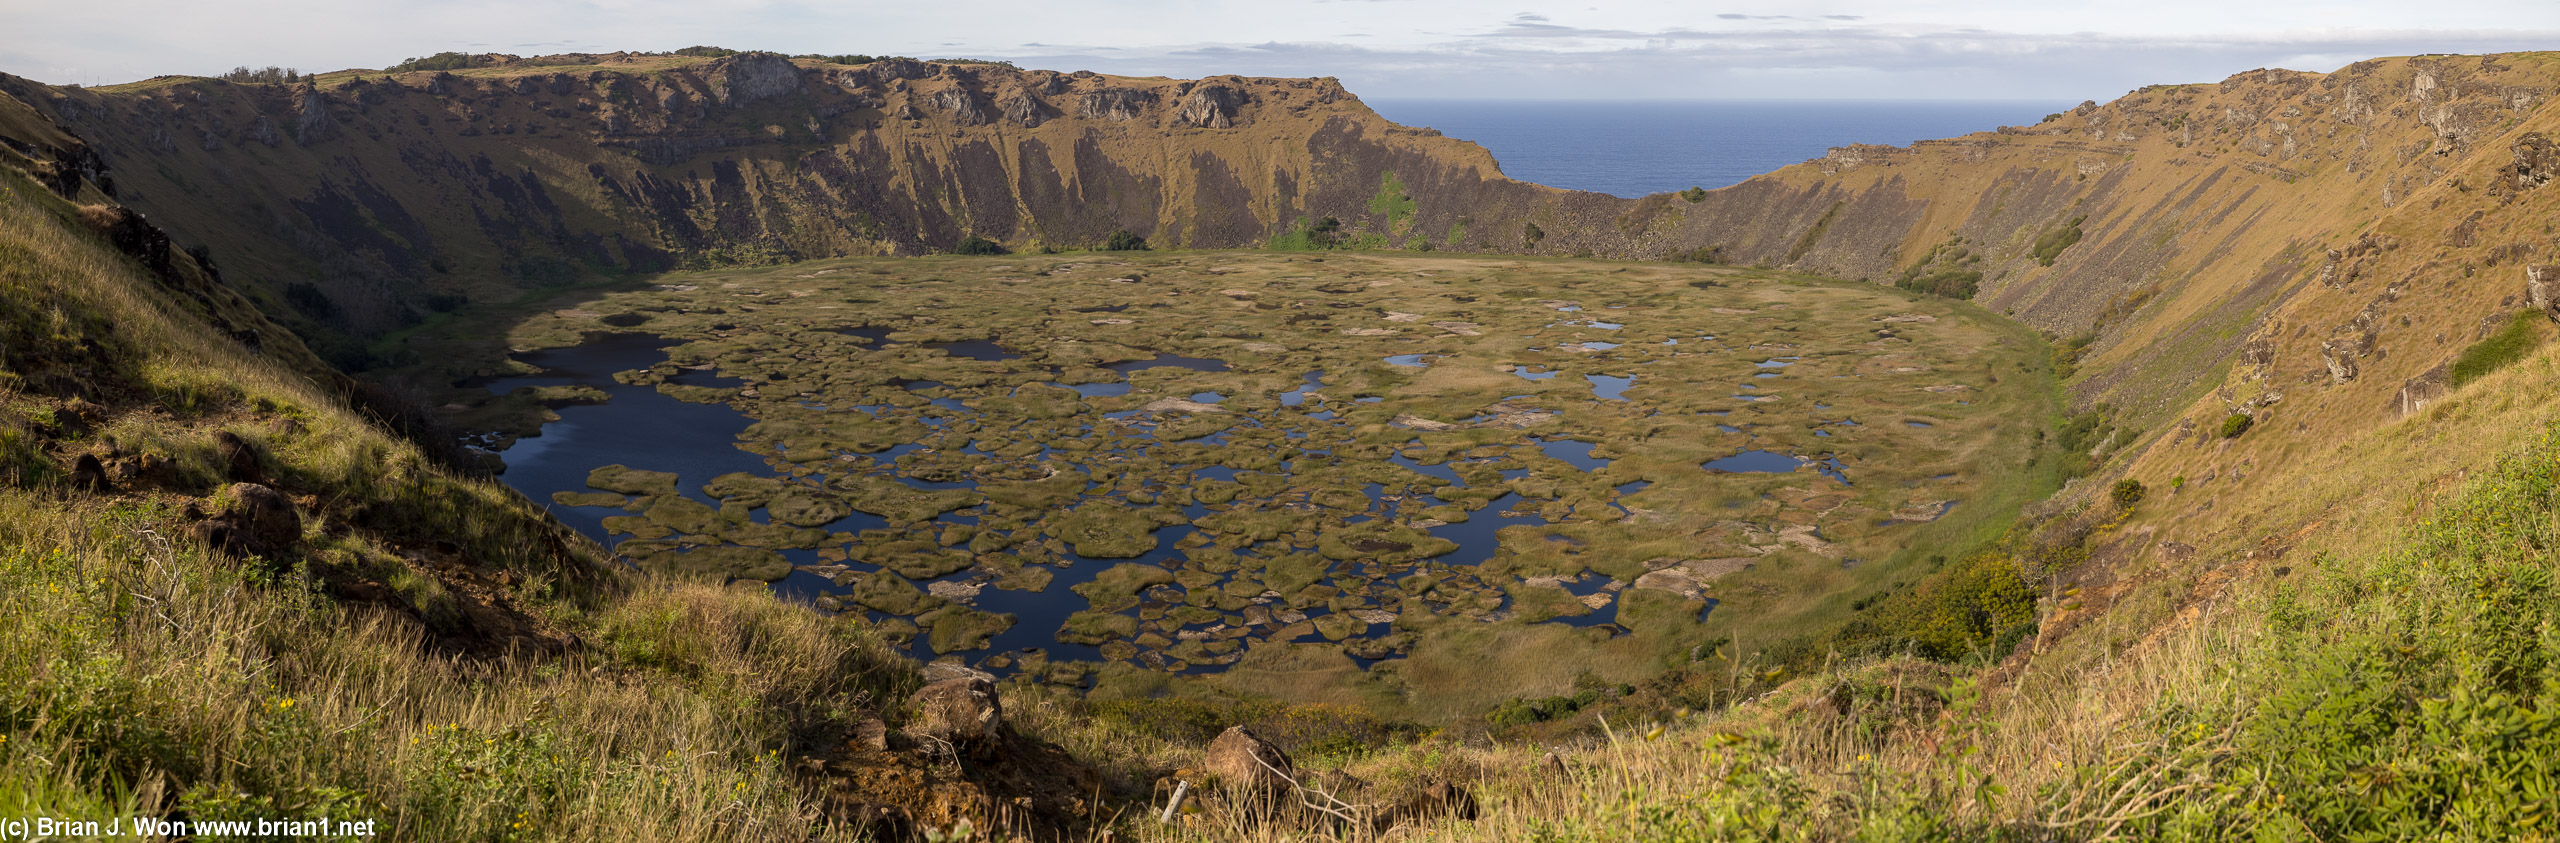 Rano Kau, an extinct volcano at the southwest corner of Rapa Nui.